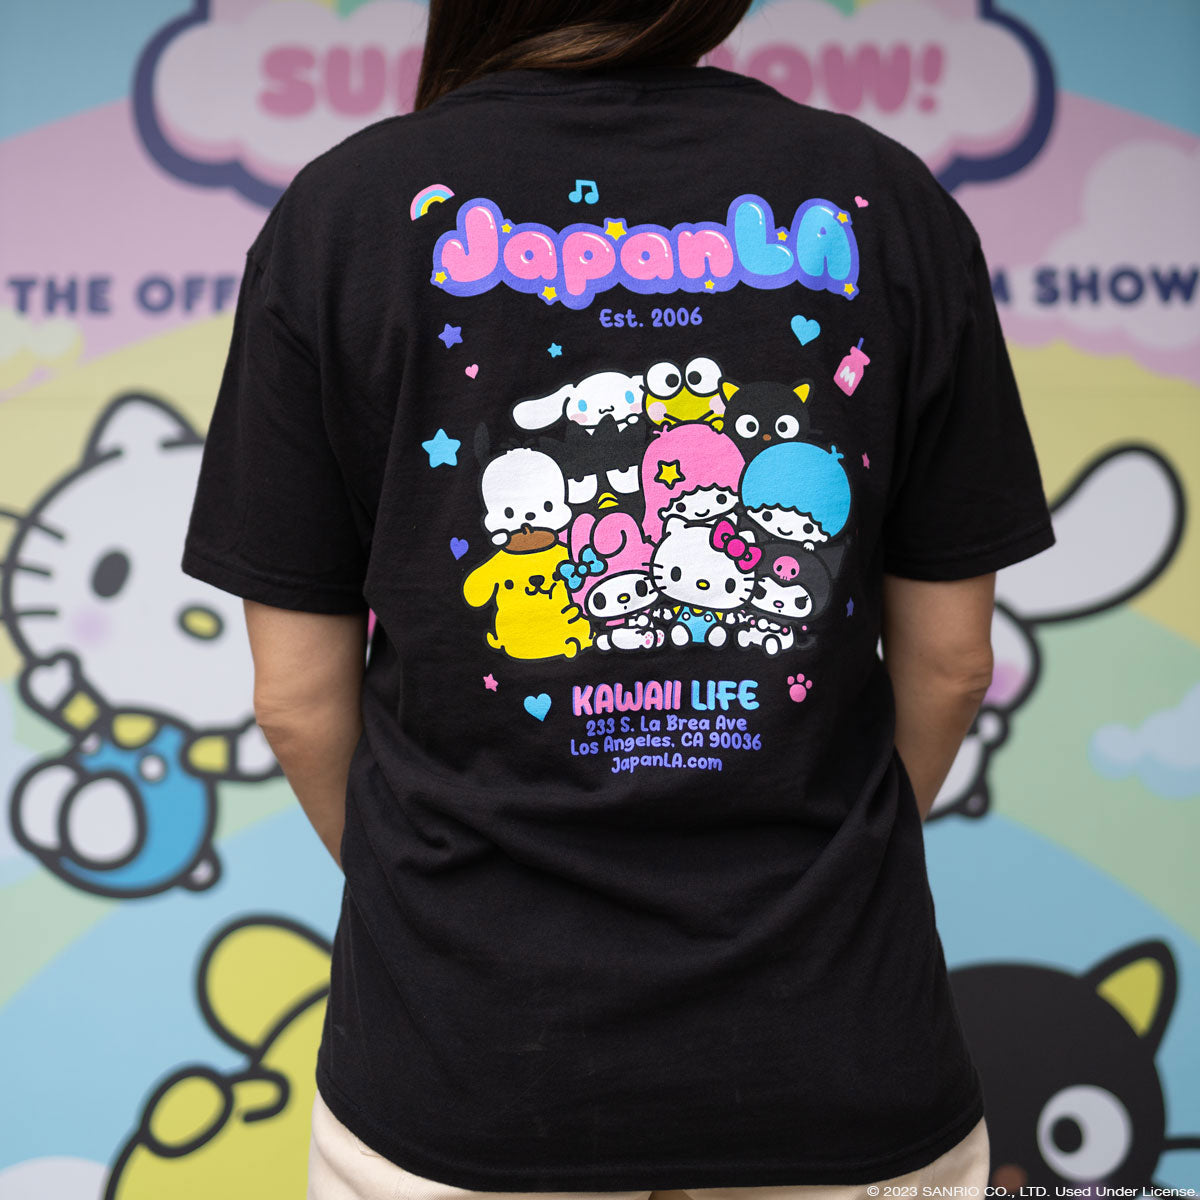 Sanrio Hello Kitty Skateboarder On Back Black Cotton T Shirt NEW Large Last  One